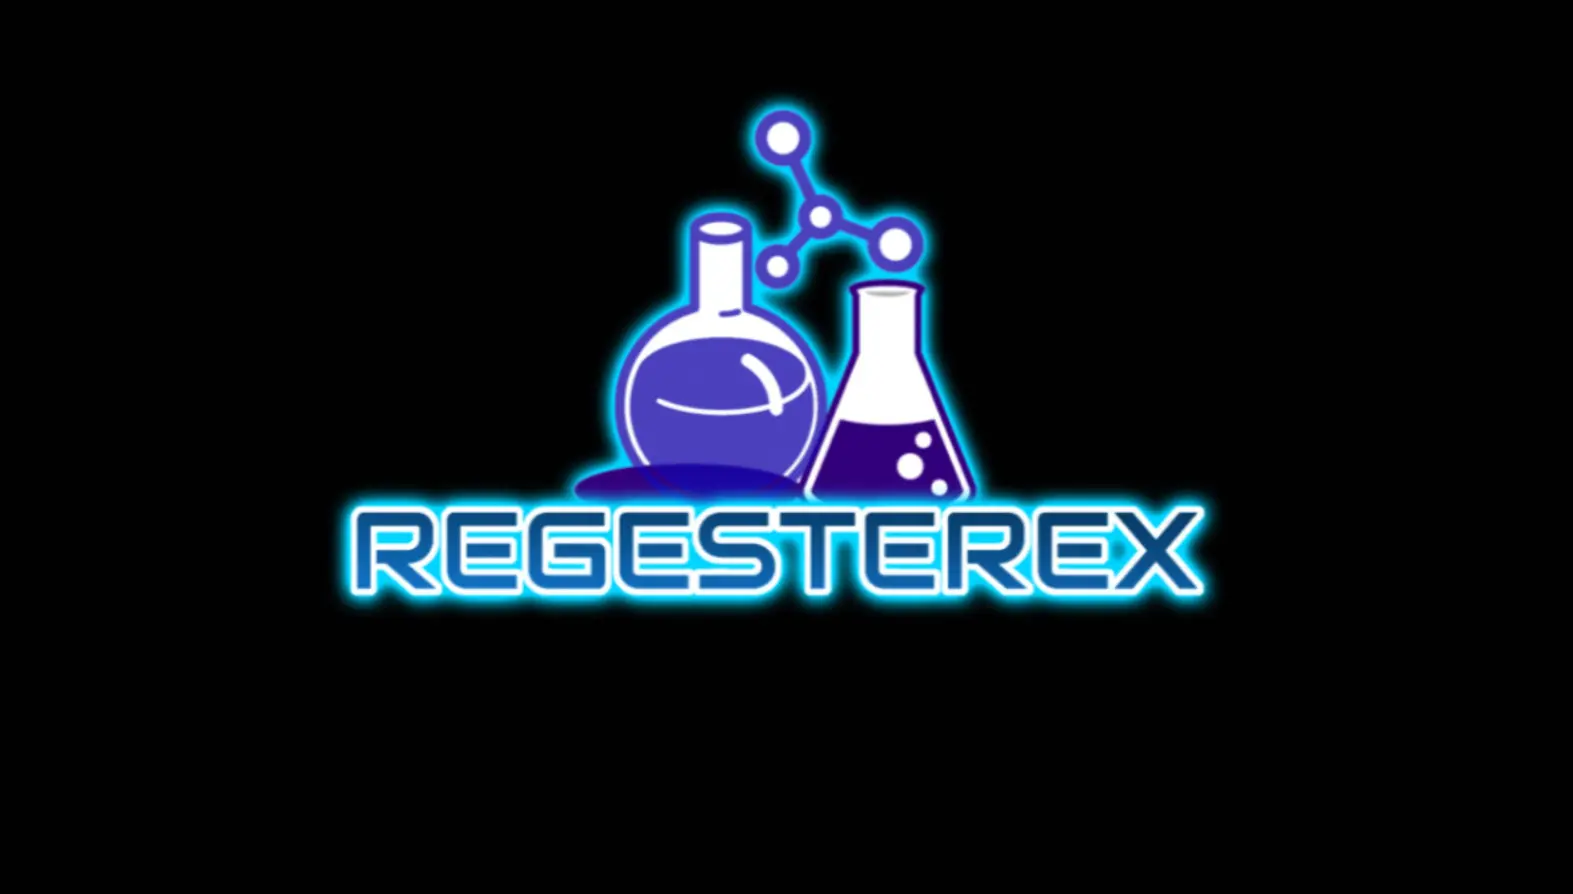 Regesterex main image